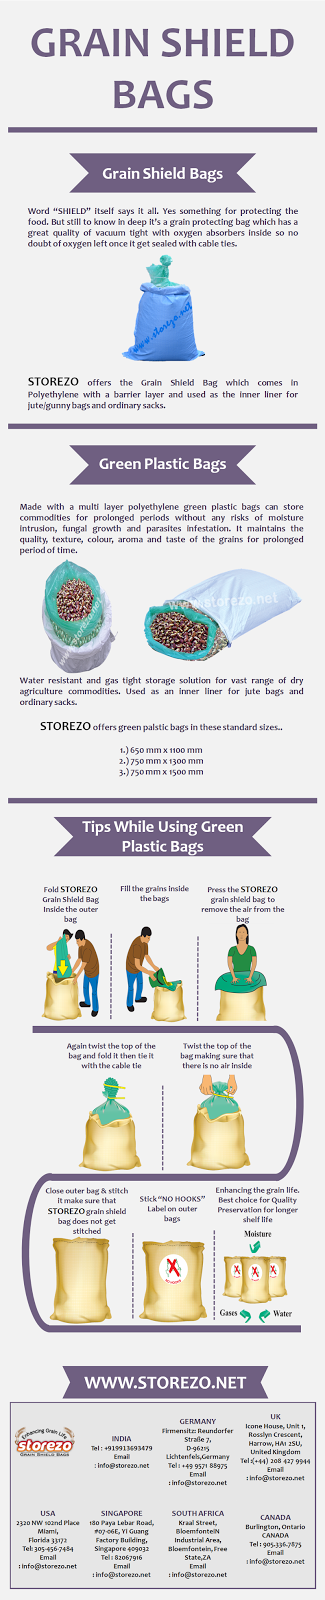 Storezo Grain Storage Bags | Storezo Green Plastic Bags